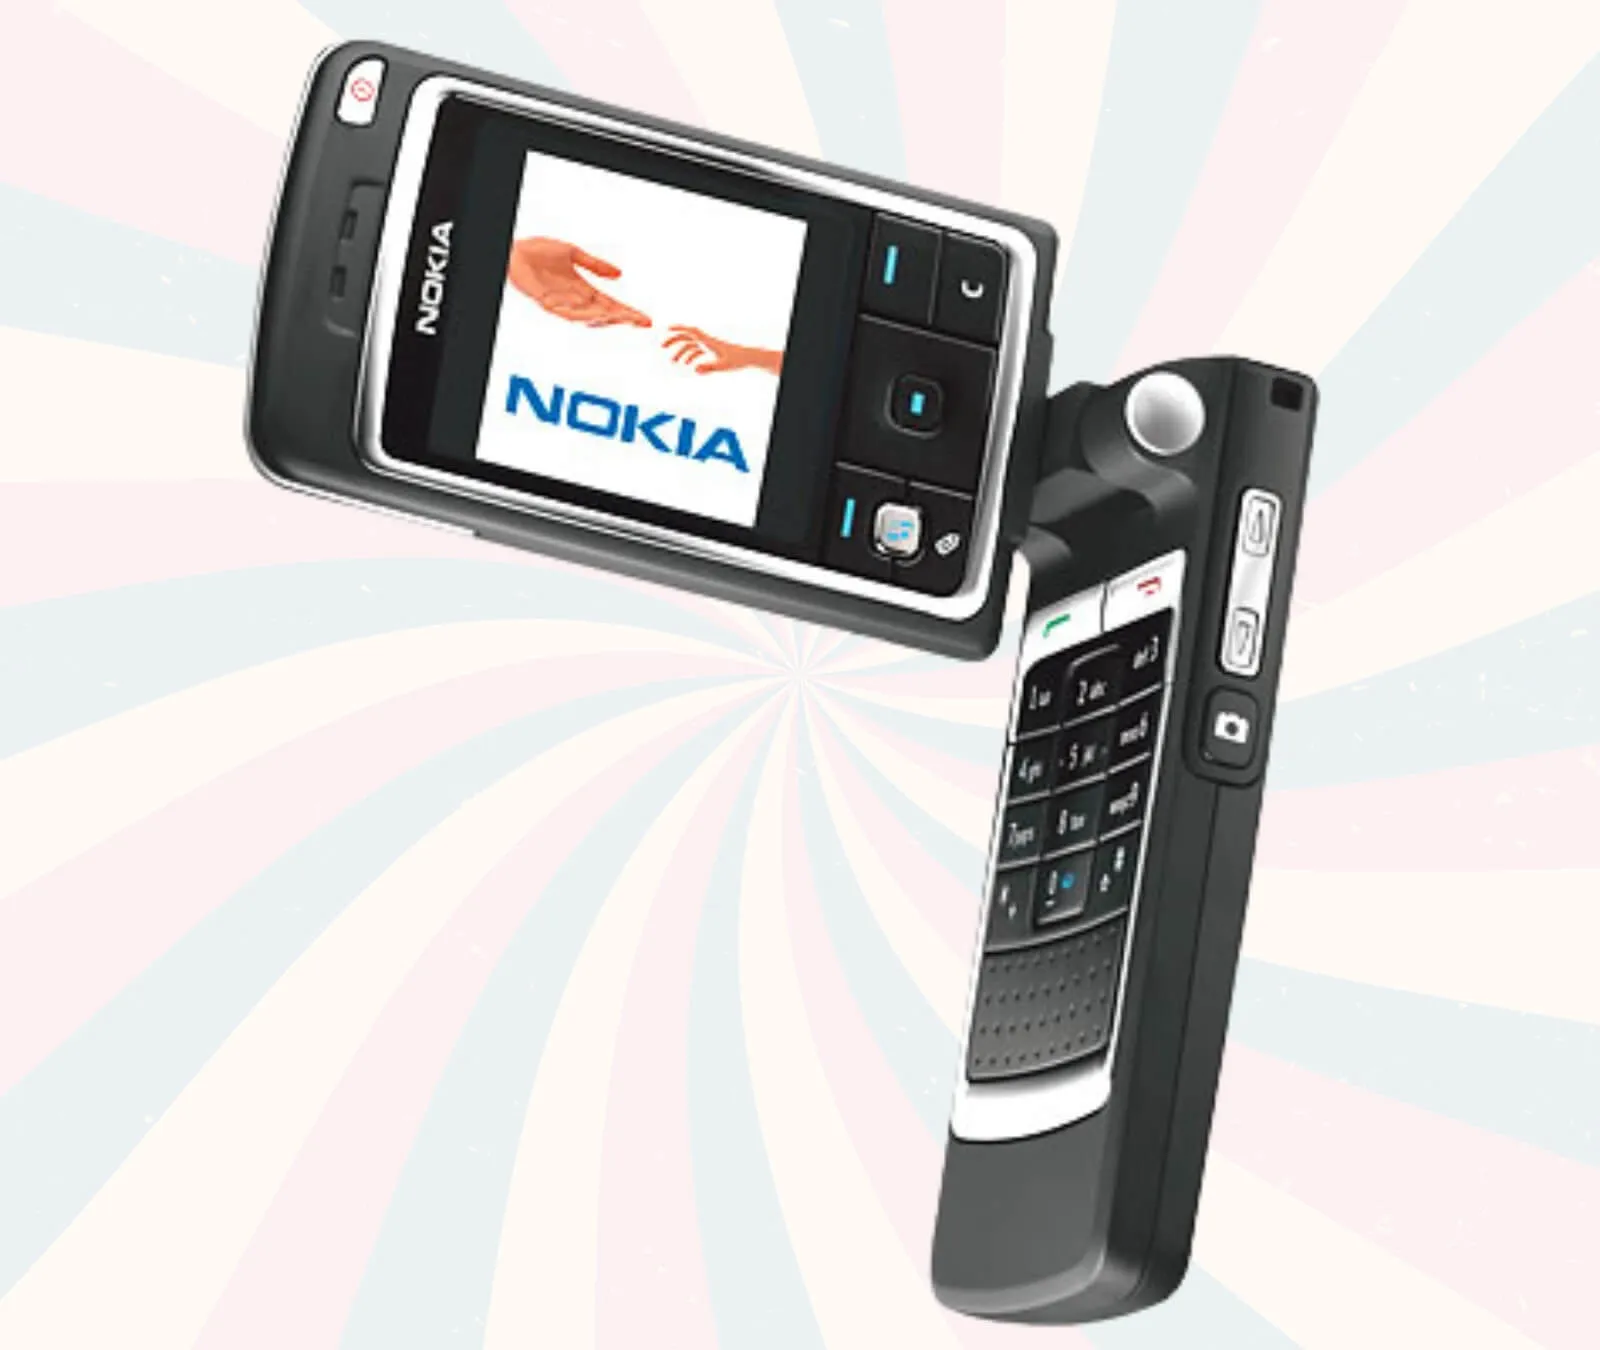 Nokia 6260 flip form phone